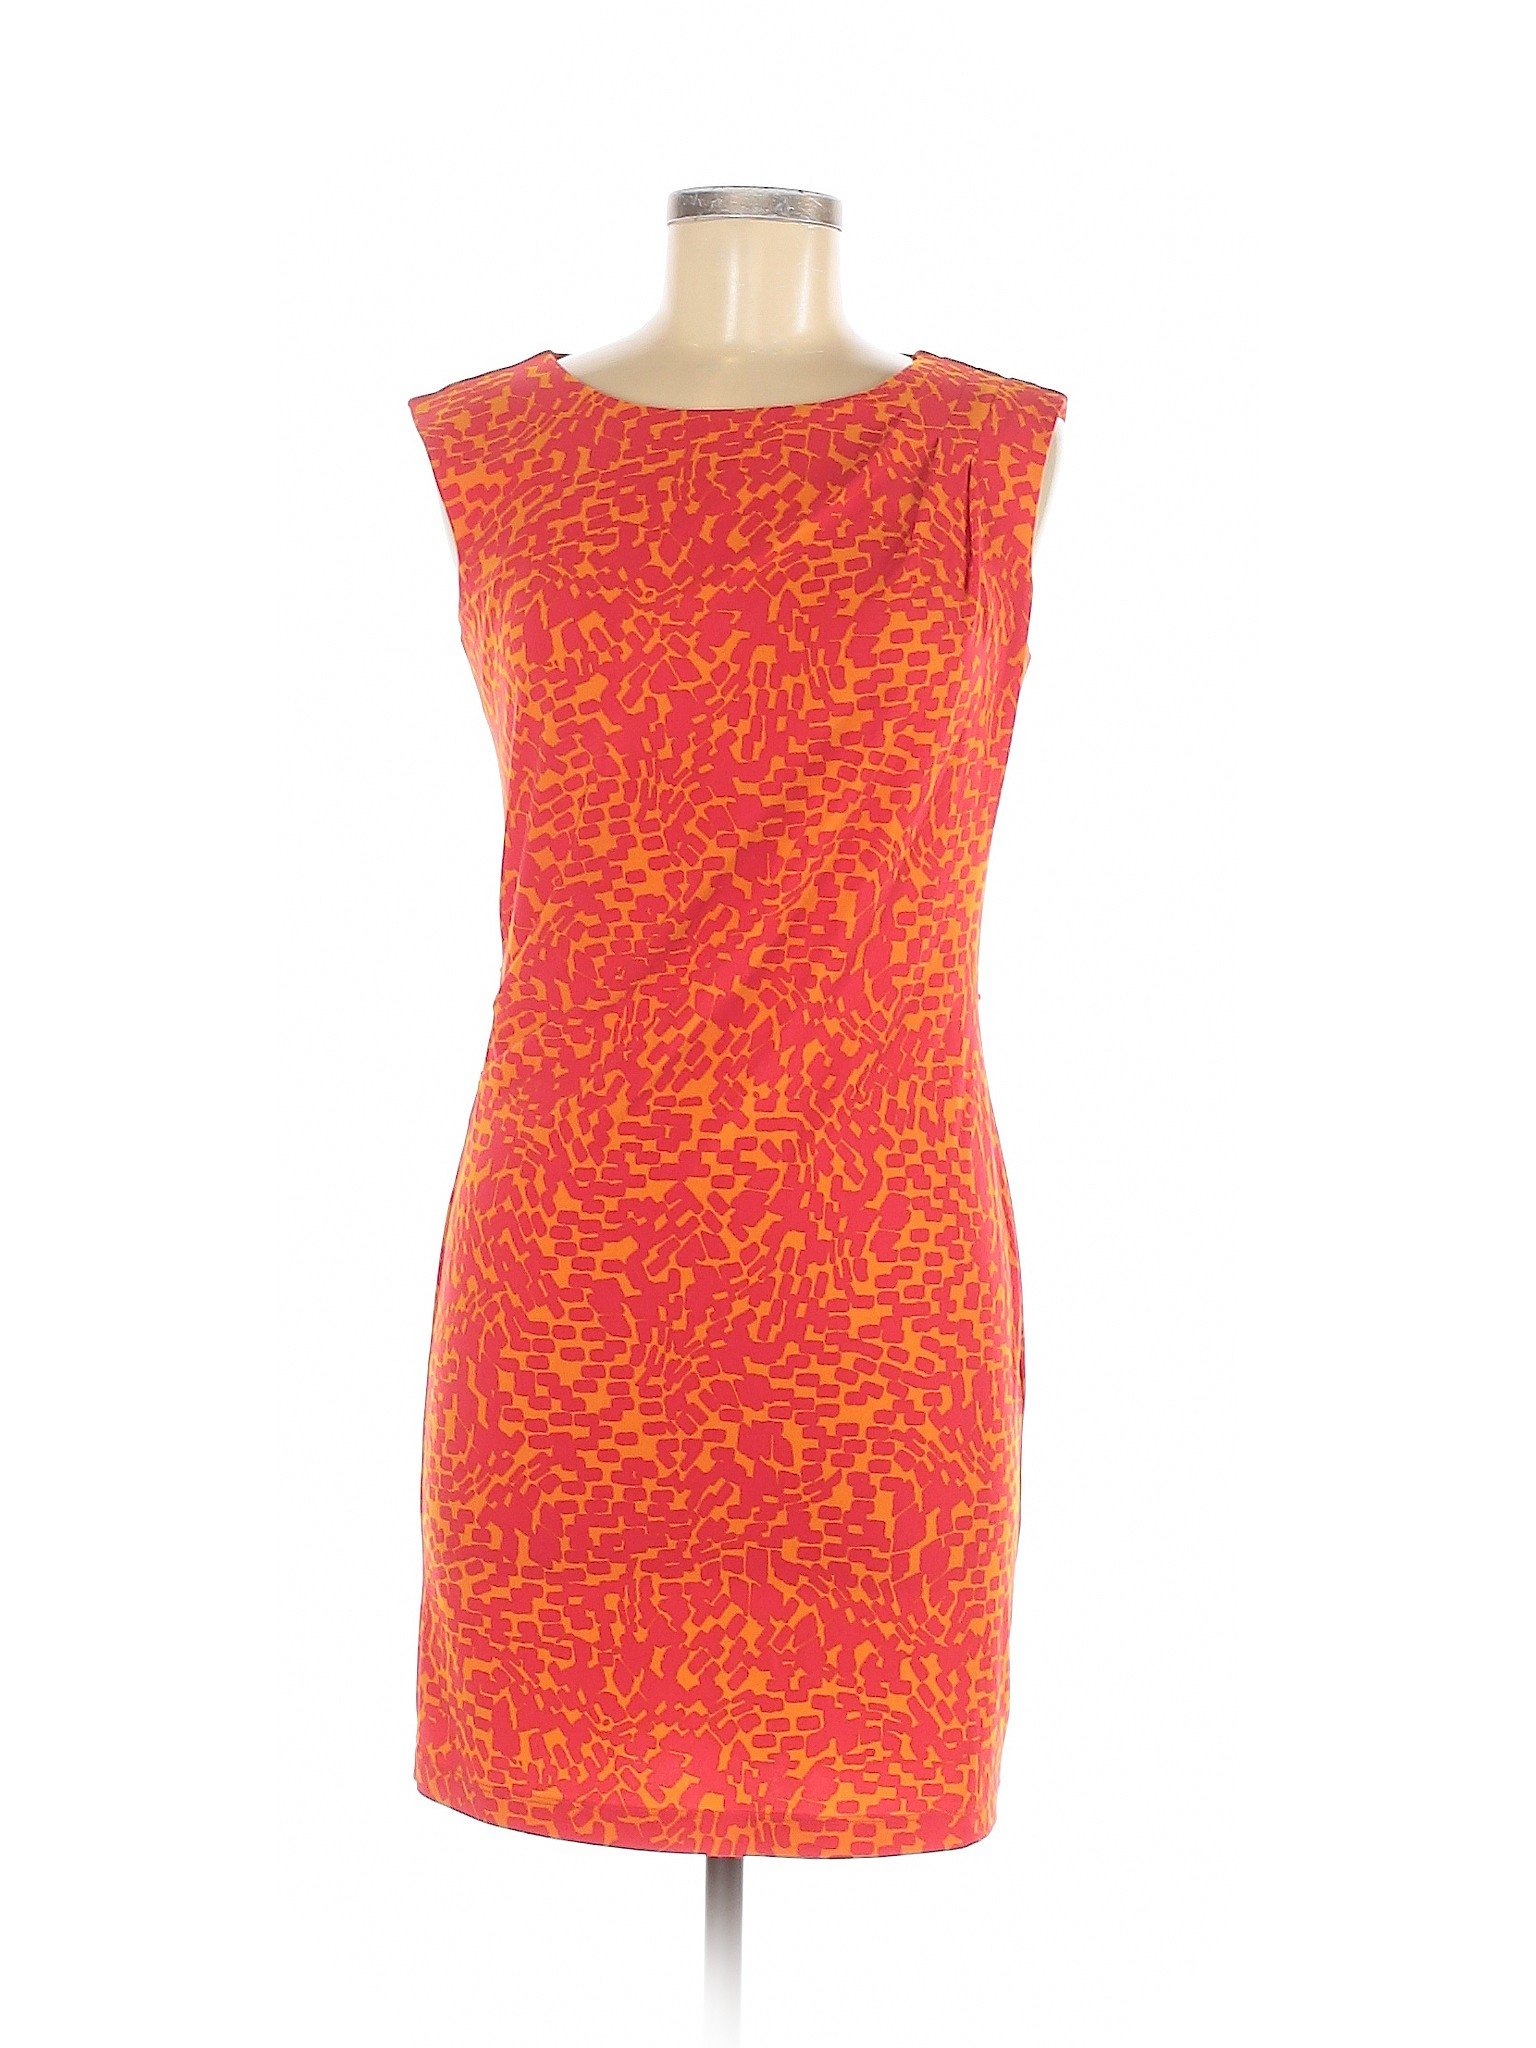 Guess Women Orange Casual Dress 2 | eBay